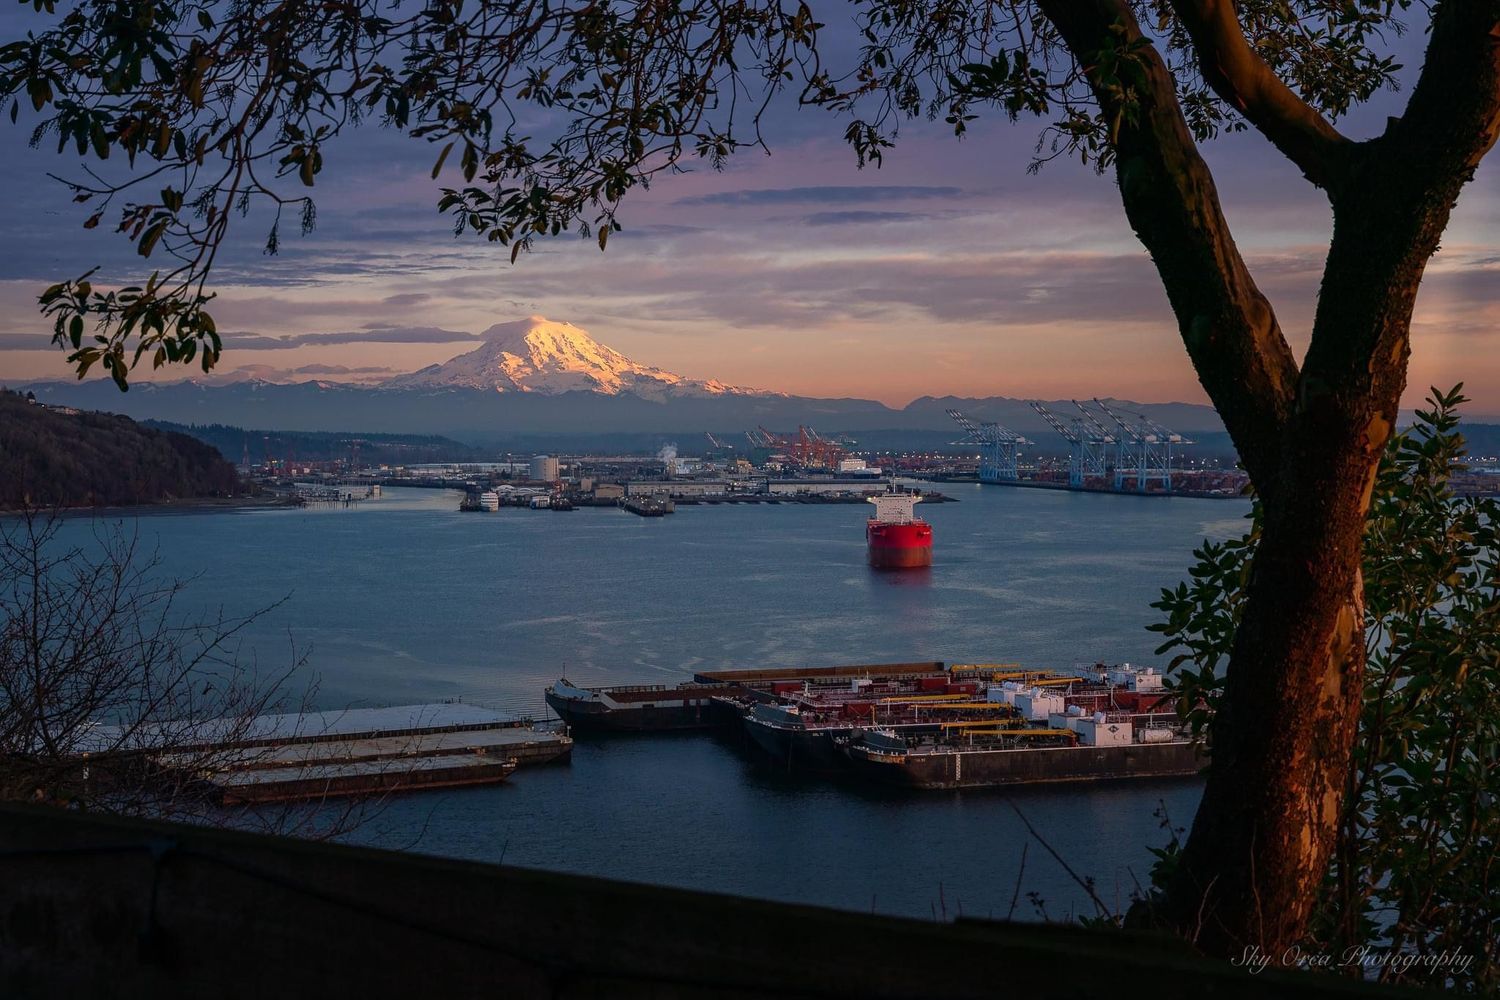 Gallery Photo of Mt Rainier from Tacoma, WA